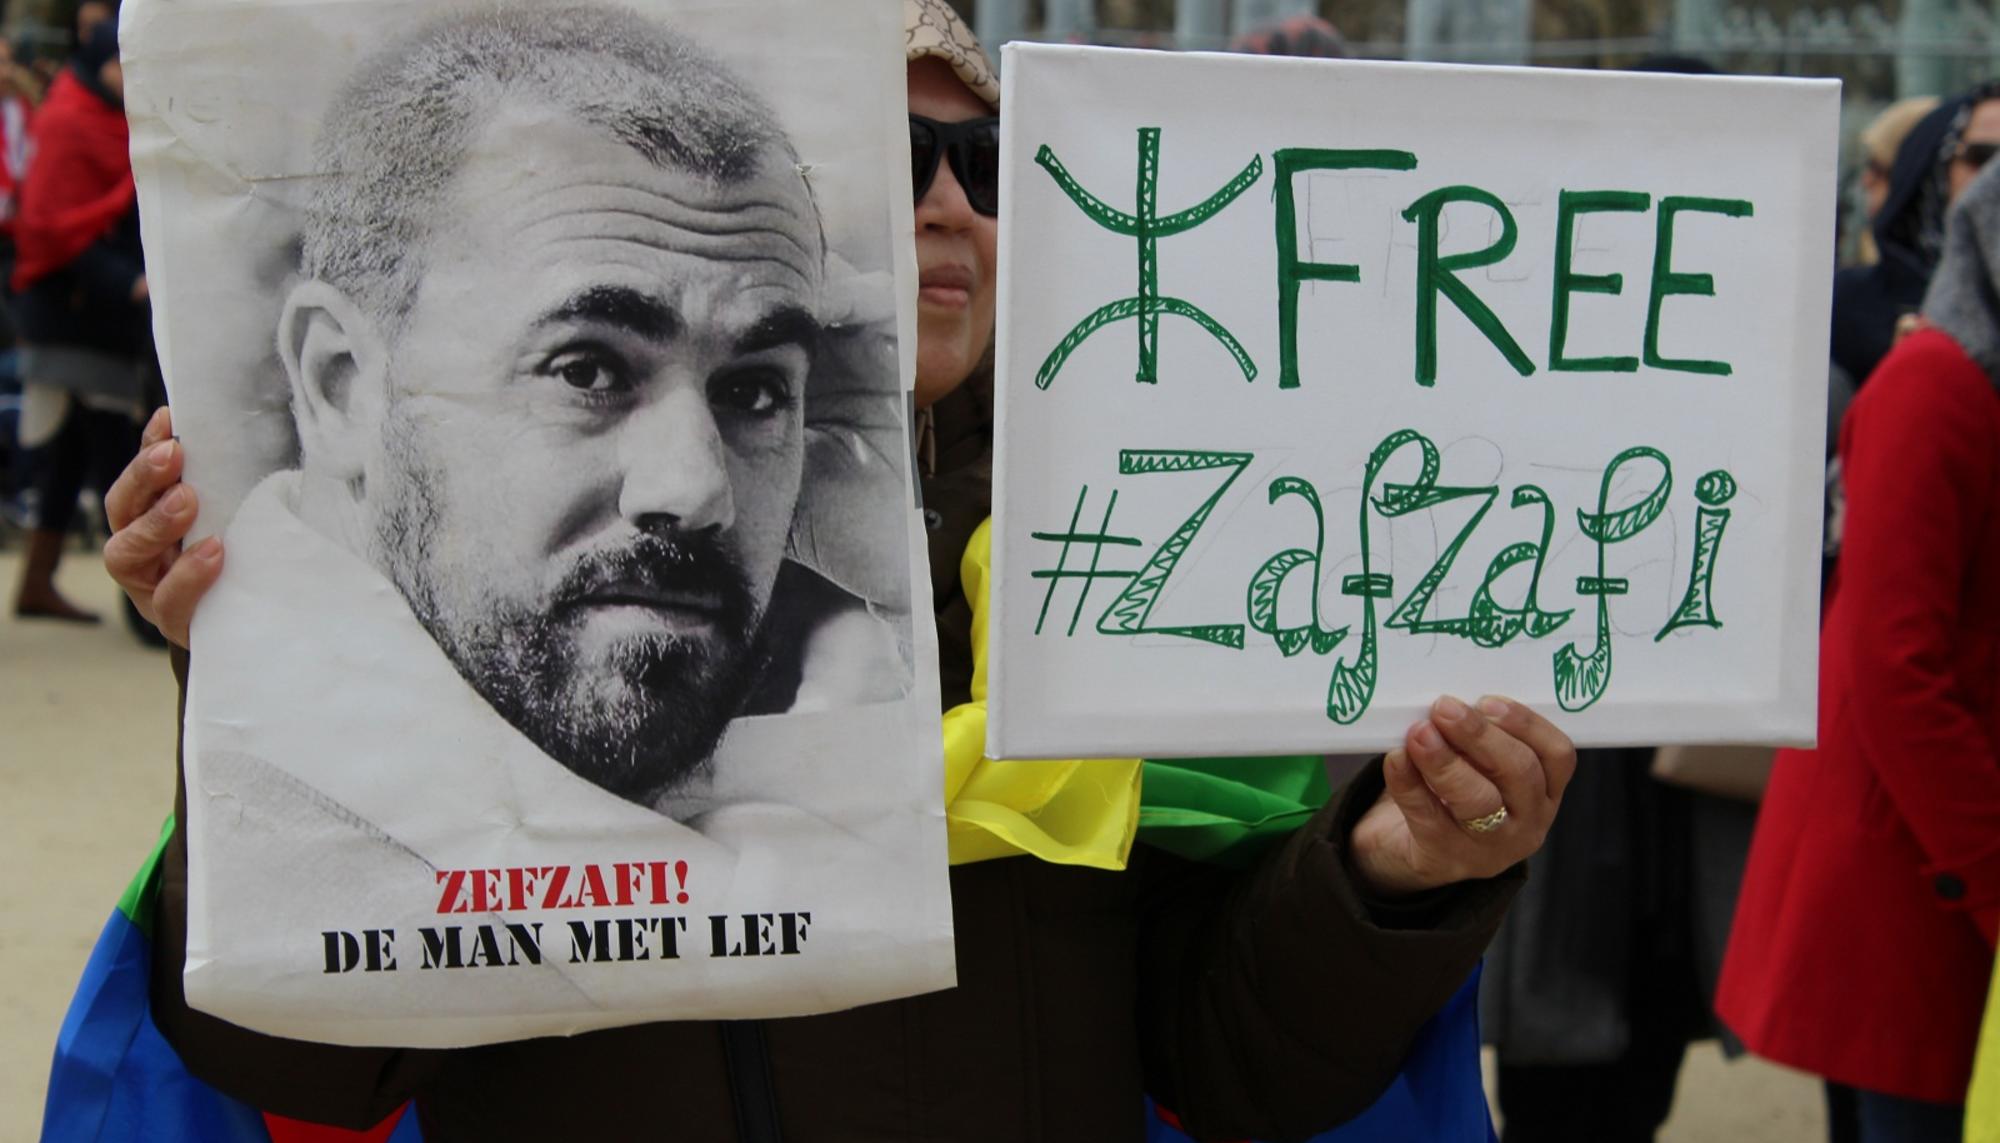 Libertad para Nasser Zefzafi, durante la manifestación